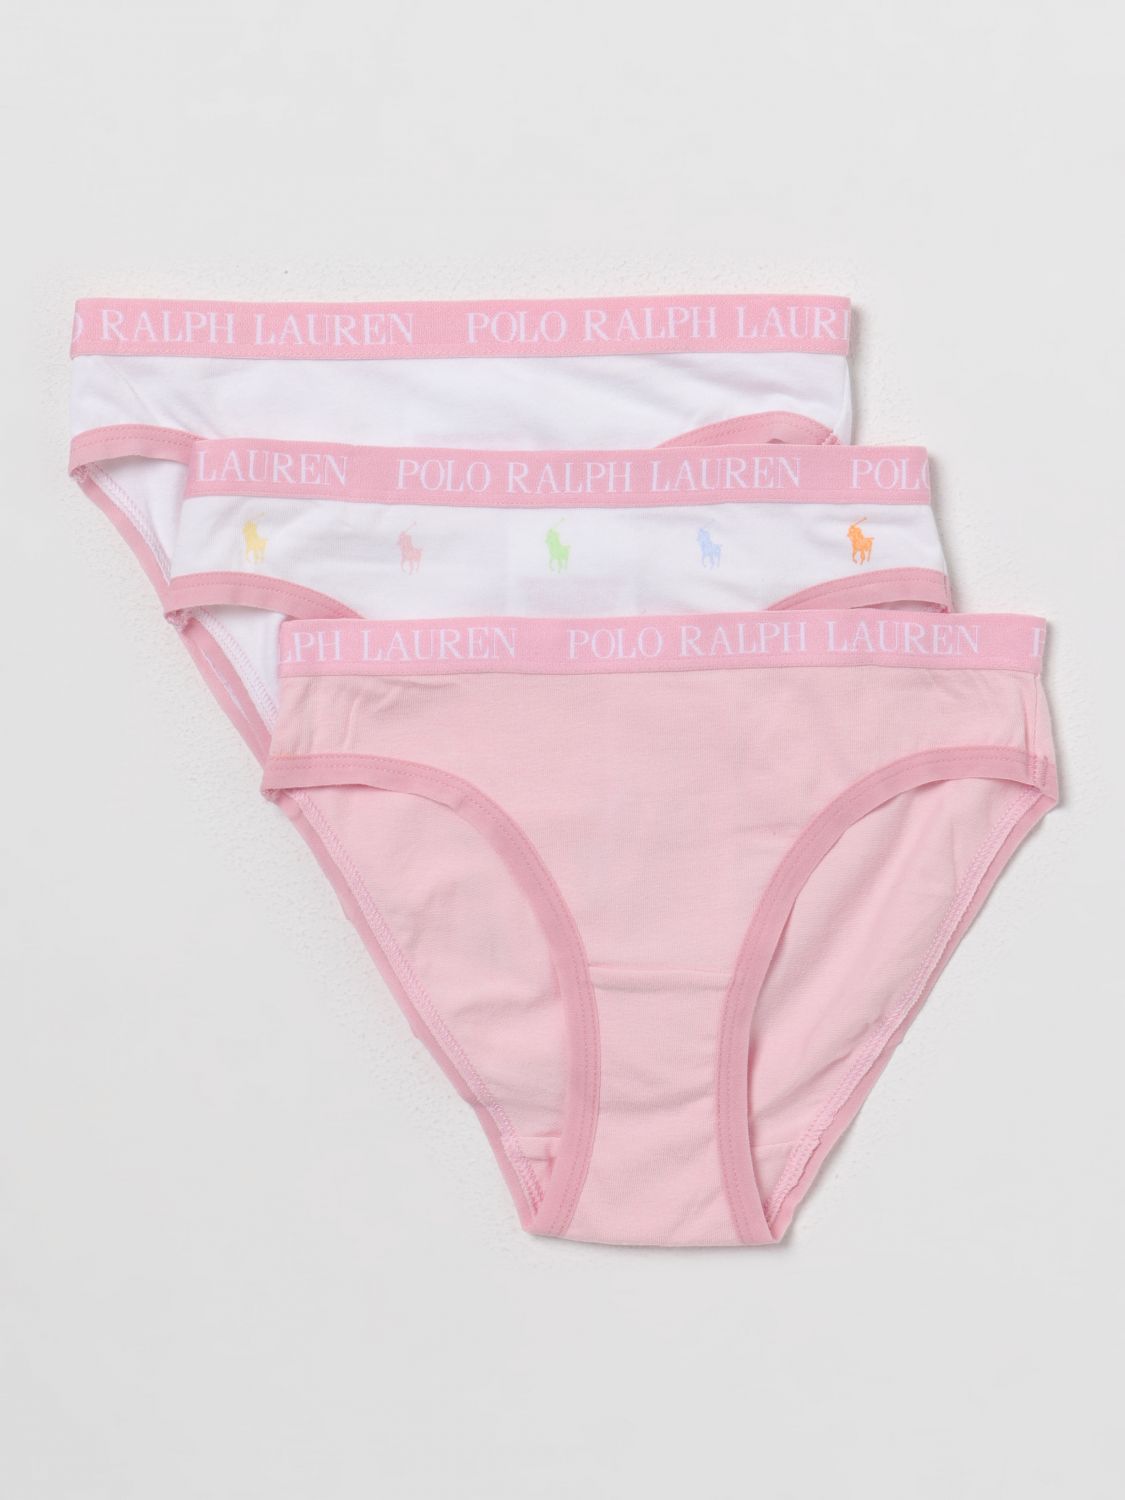 Polo Ralph Lauren Underwear Kids Color Pink